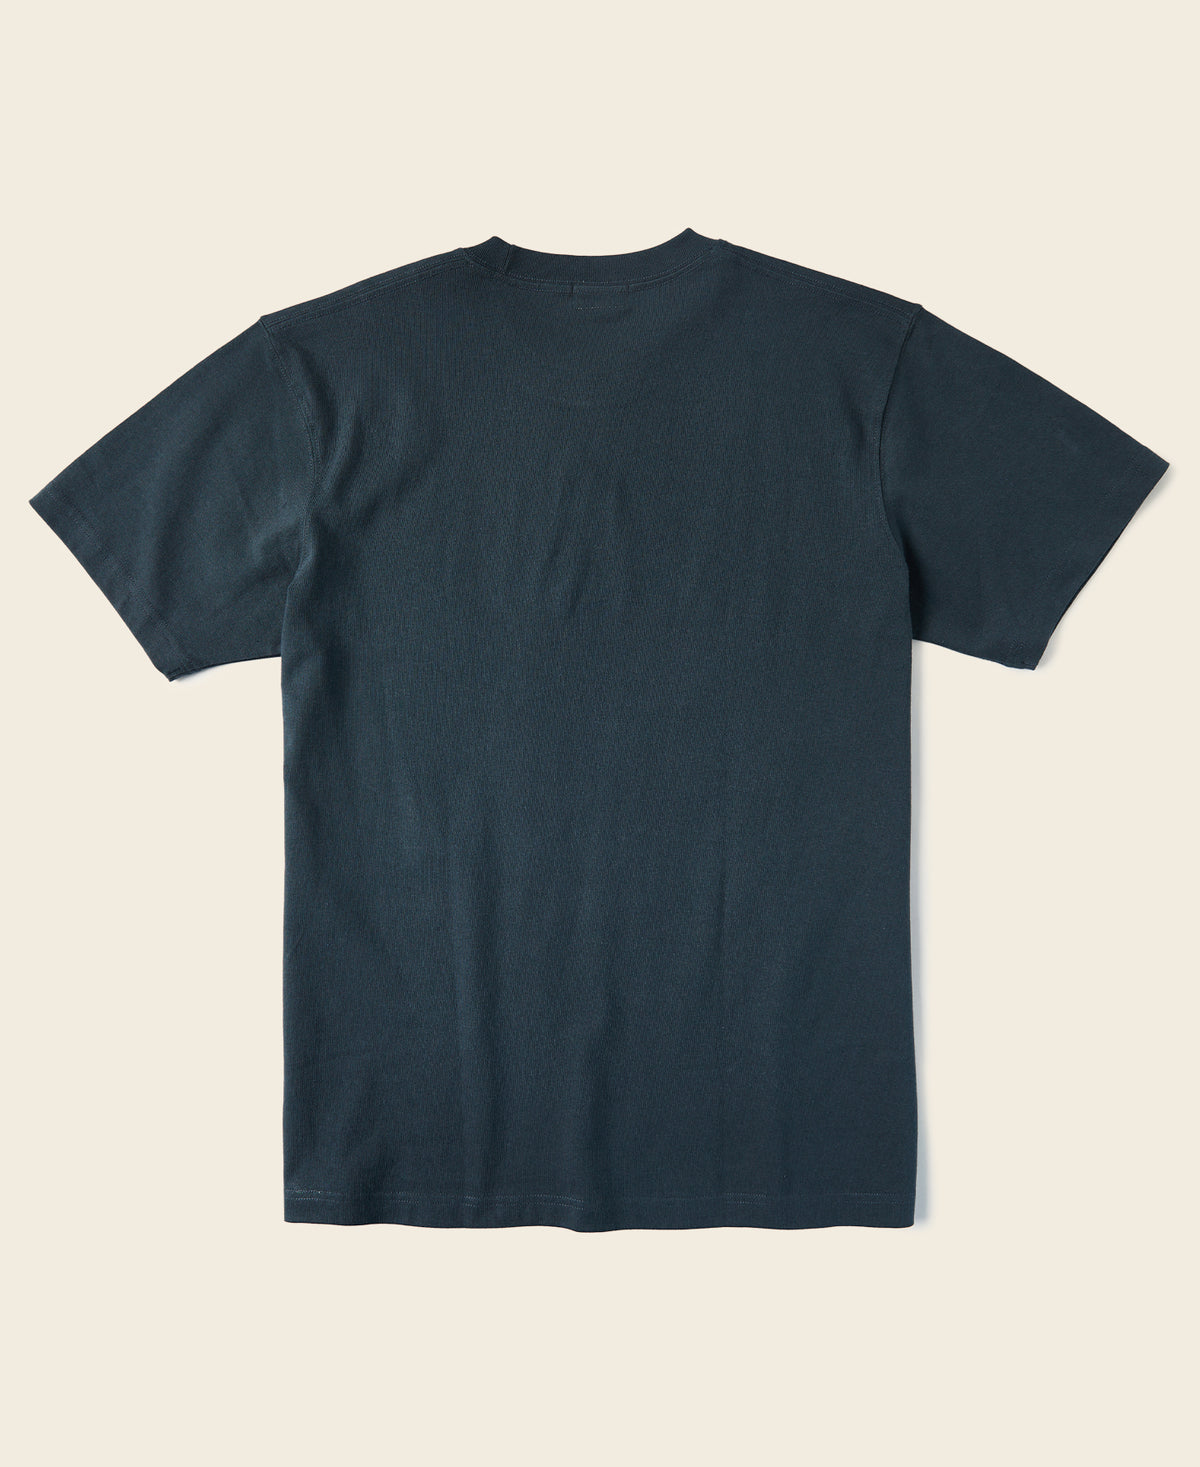 9 oz US Cotton Tubular T-Shirt - Vintage Black